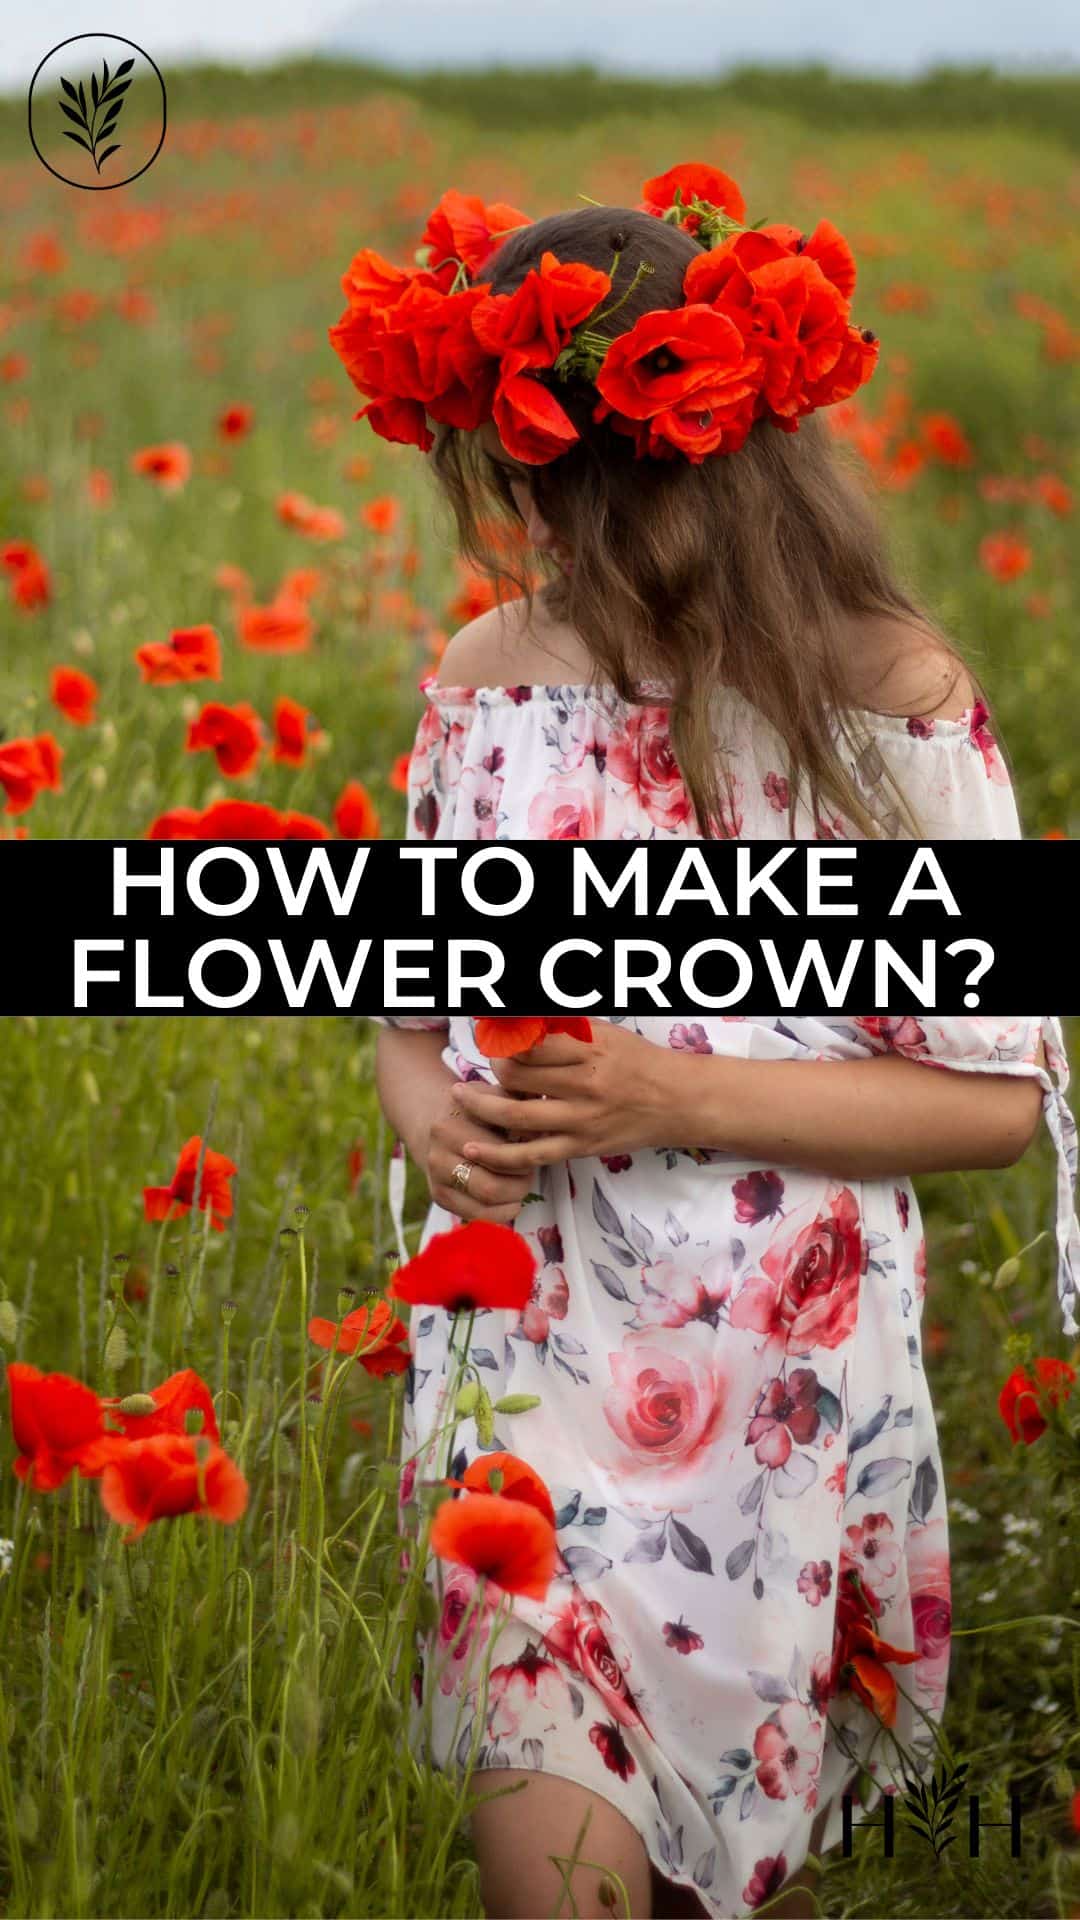 How to make a flower crown? Via @home4theharvest